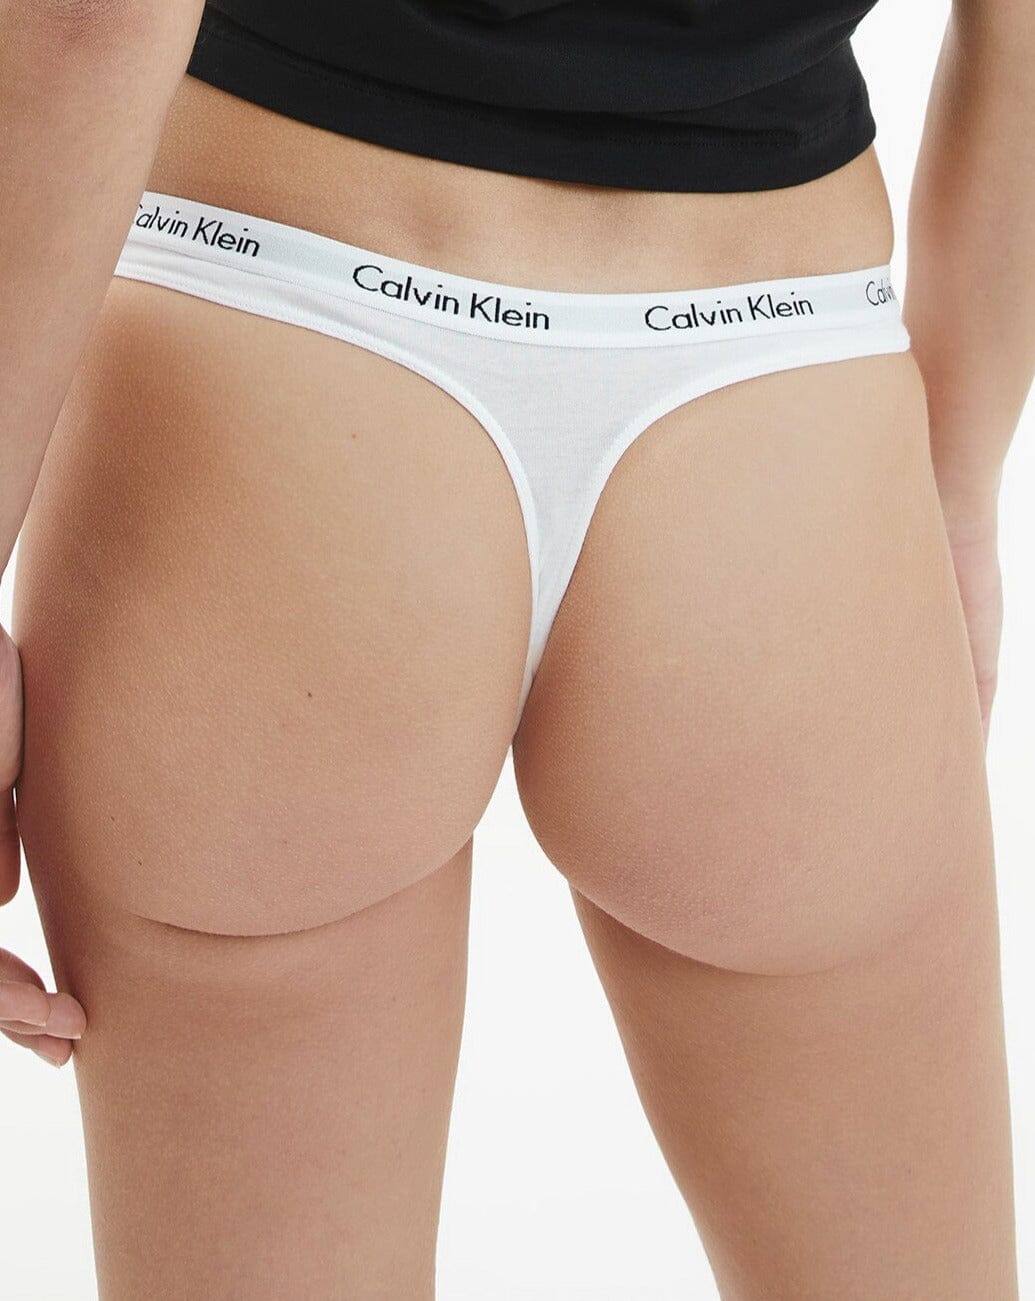 Calvin Klein Carousel 3 Pack Thong - Black/Grey Heather/White - Curvy